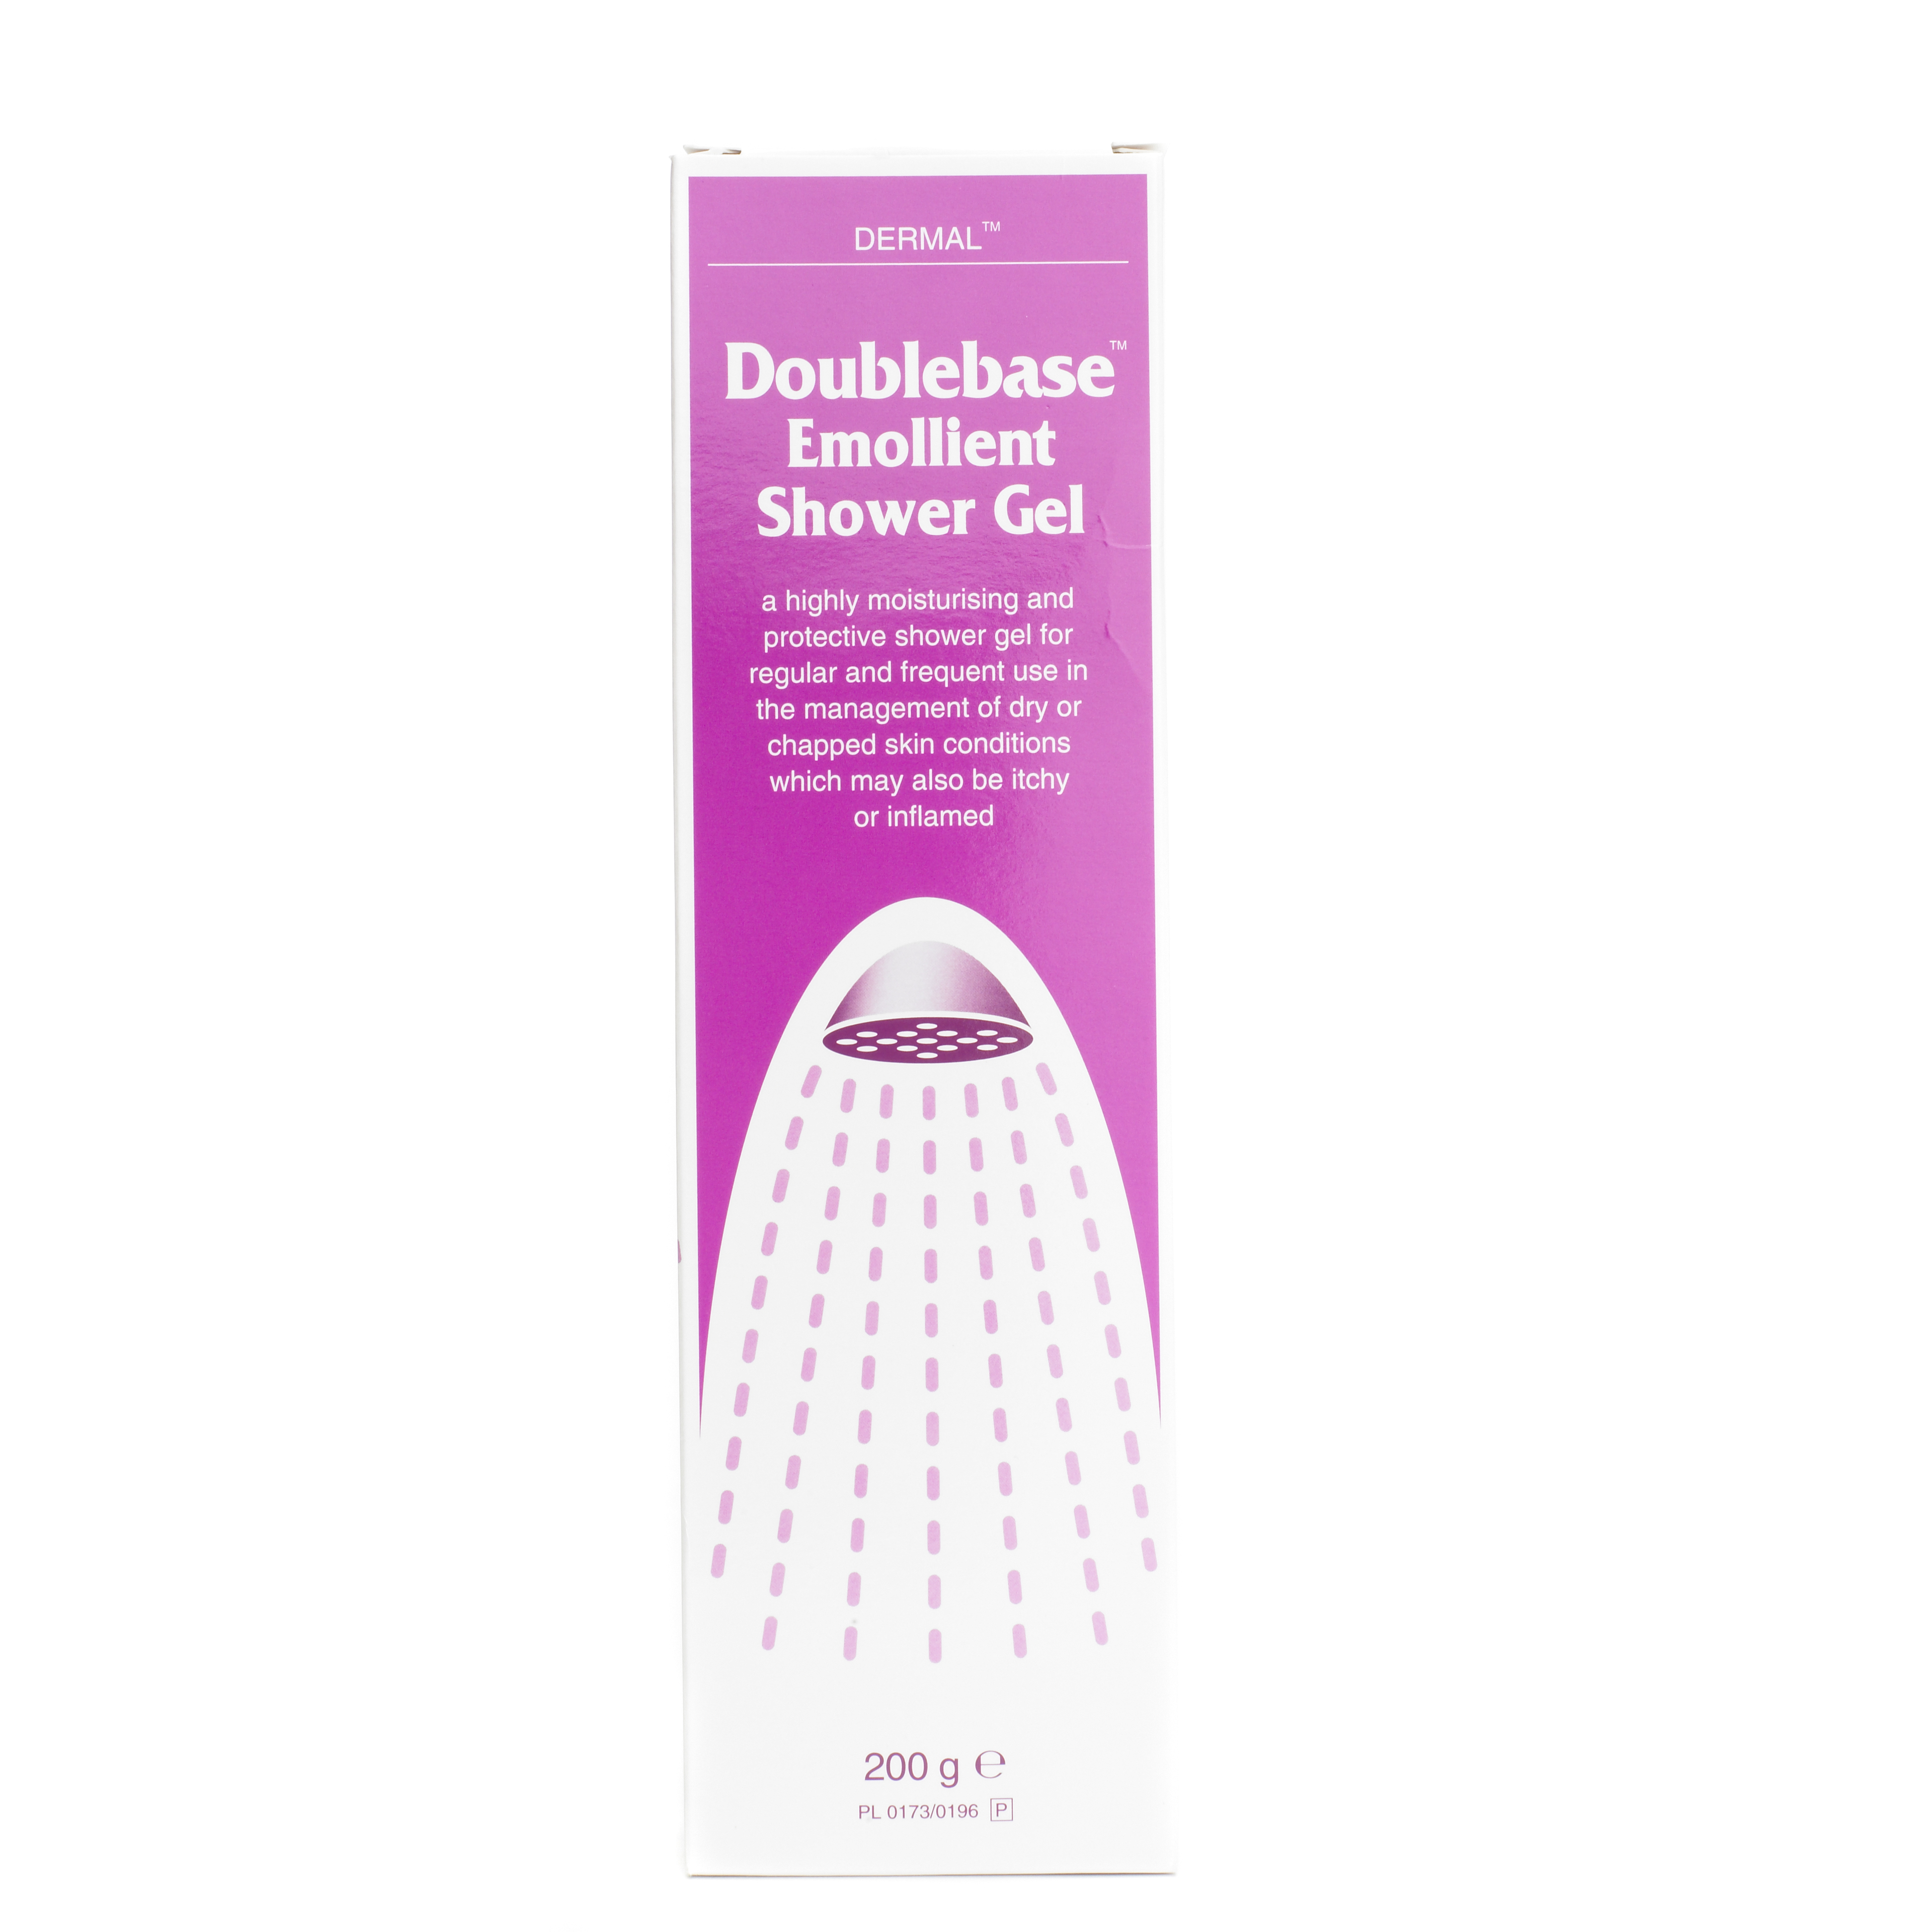 Buy Doublebase Once Emollient, 500g - Dock Pharmacy